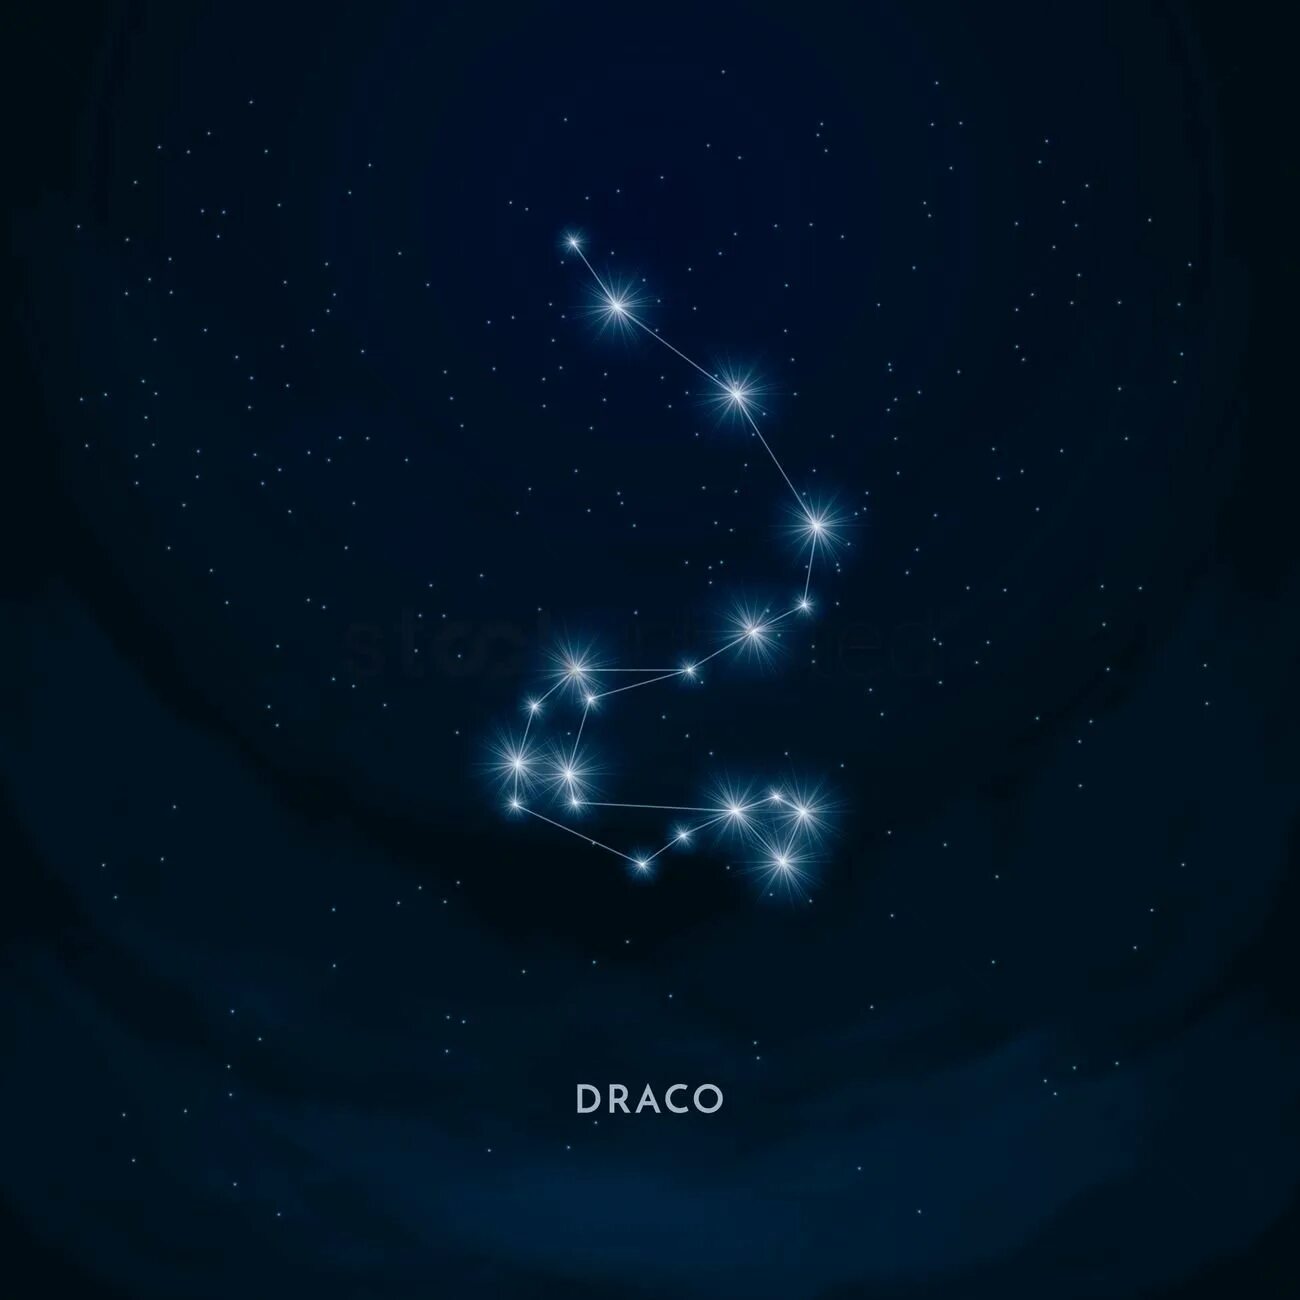 Caring star draco. Созвездие дракона. Draco Созвездие. Дракон Draco Созвездие. Астеризм дракон.